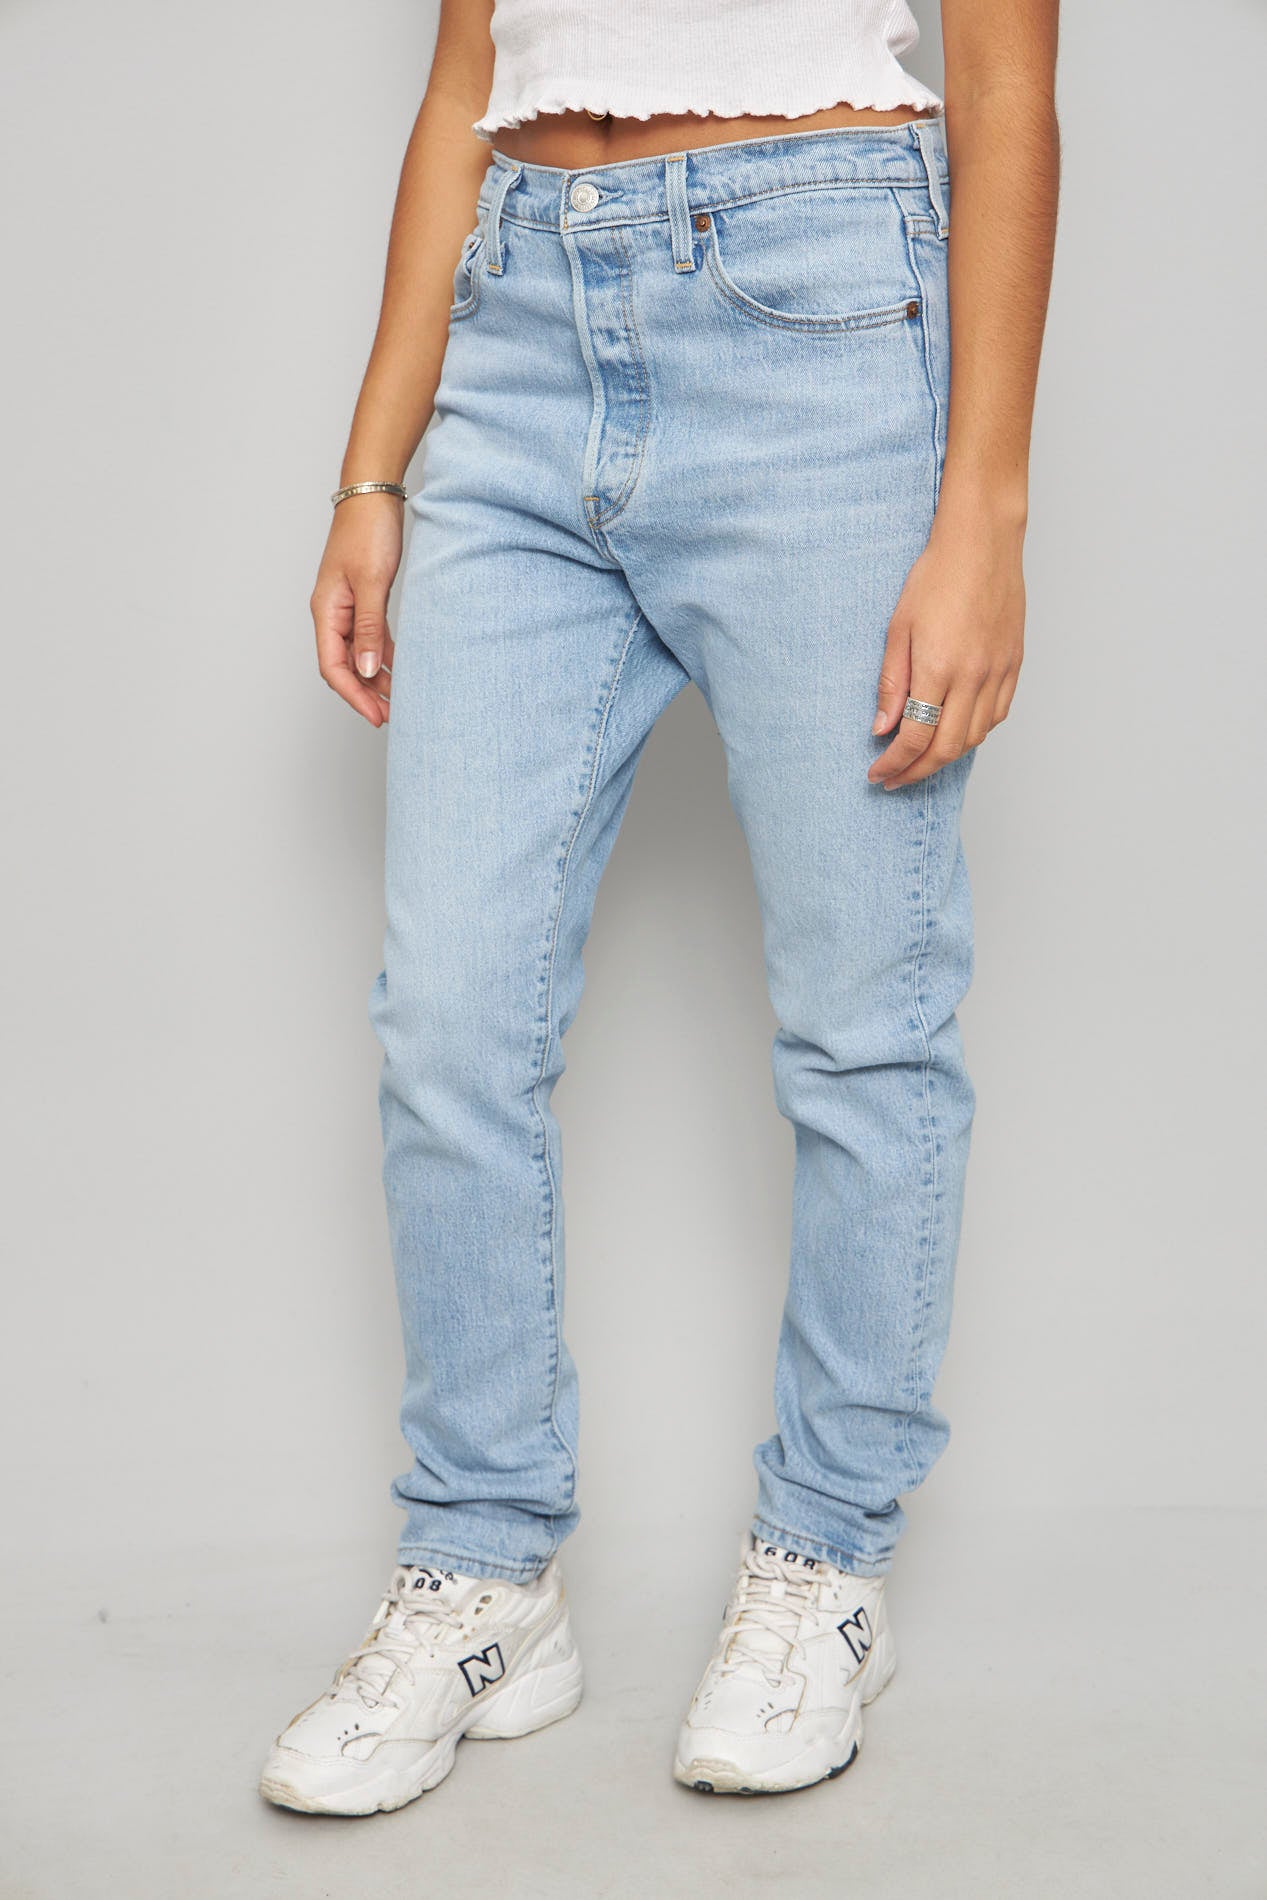 Jeans casual  azul levis talla 38 554